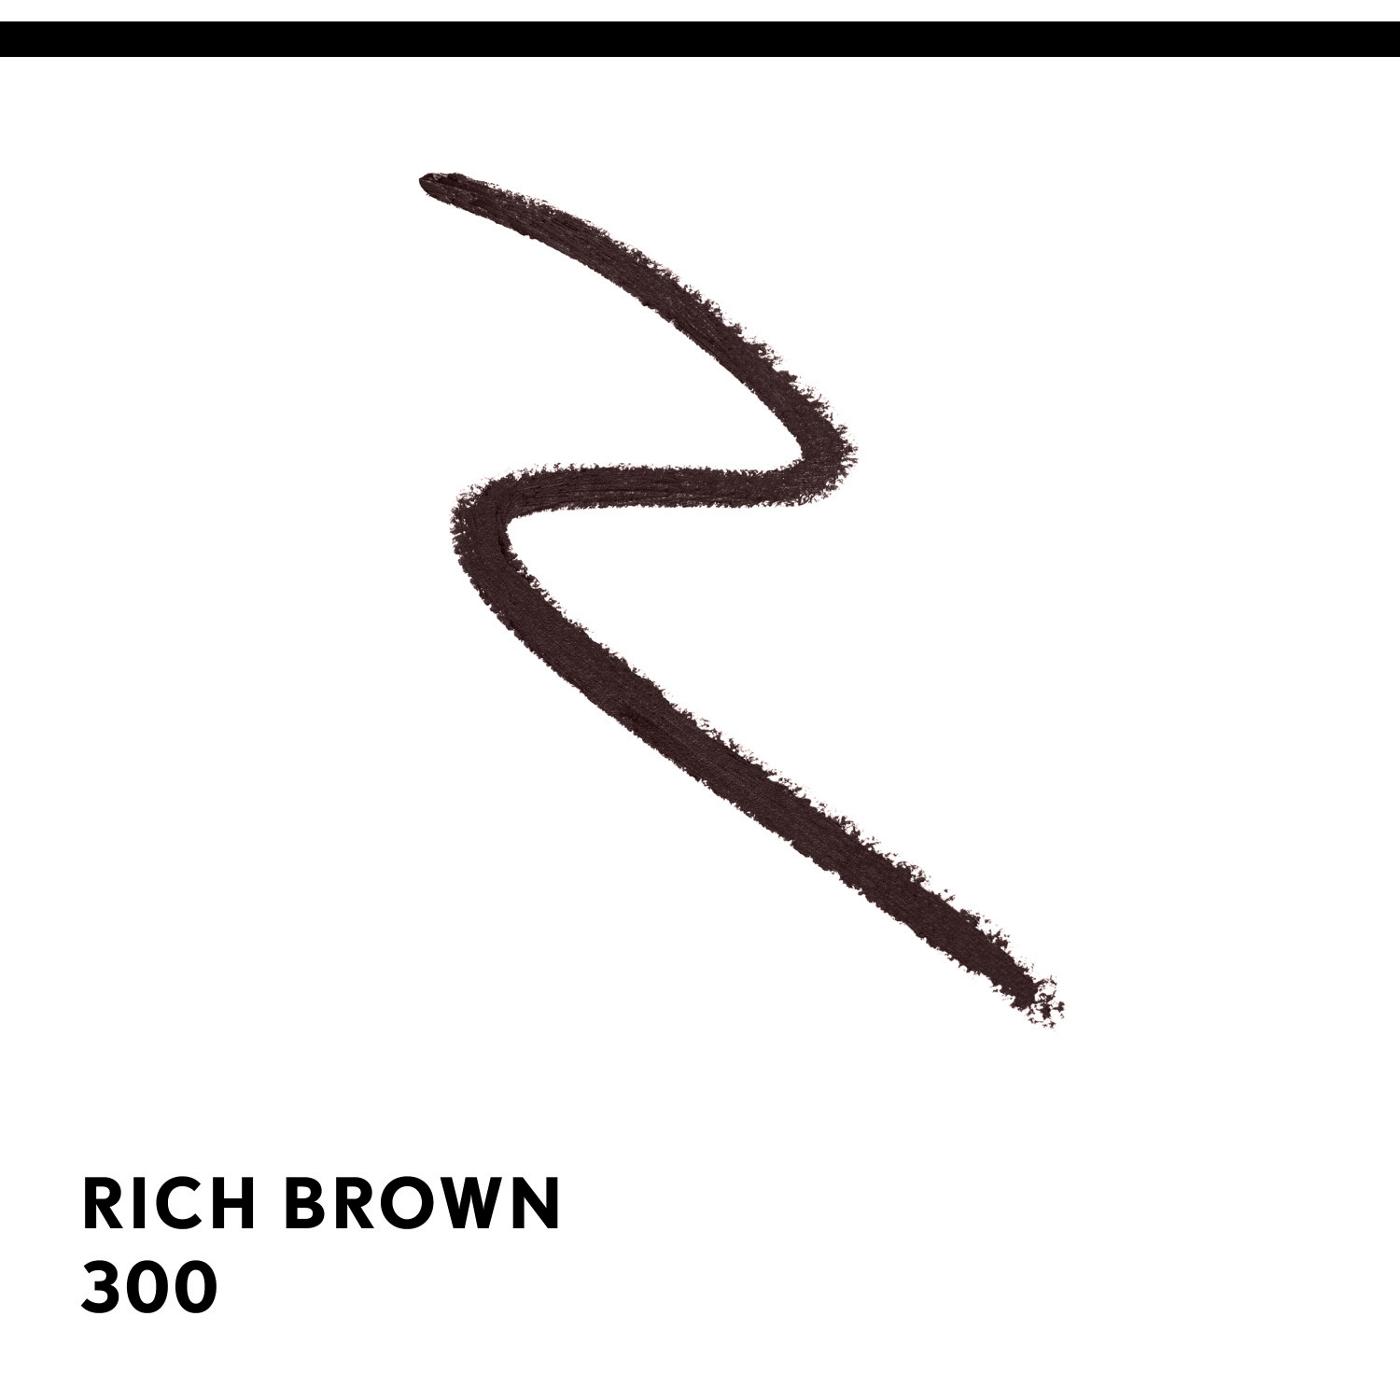 Covergirl Exhibitionist 24HR Khol Eyeliner 300 Rich Brown; image 5 of 10